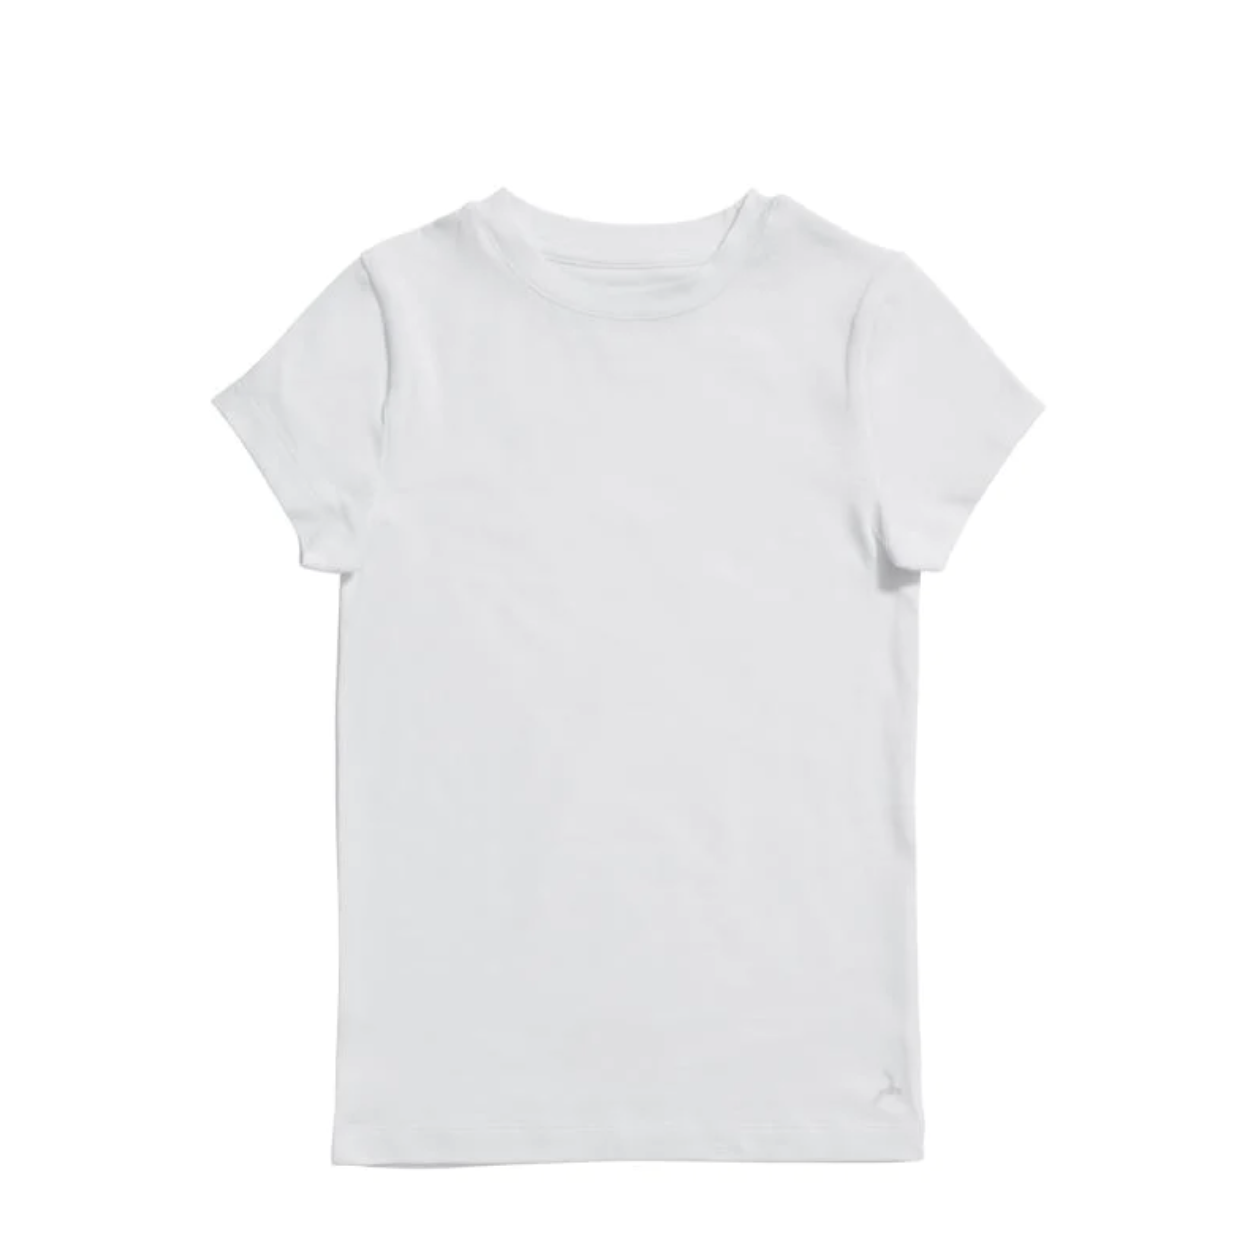 Ten Cate Shirt Basic